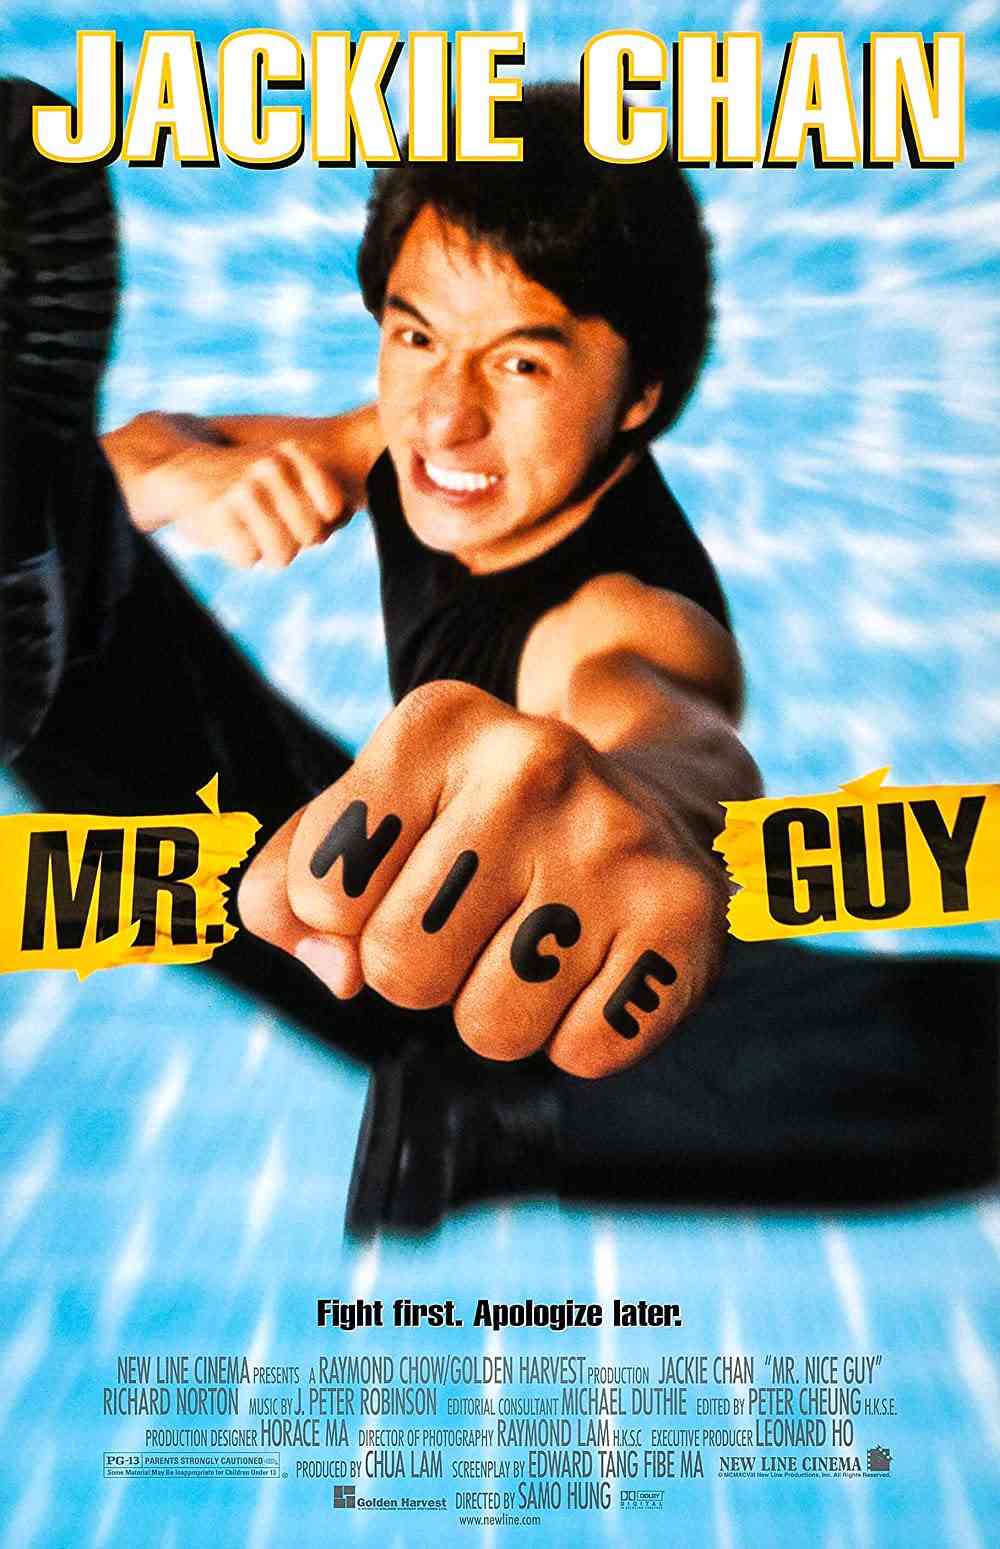 FULL MOVIE: Mr Nice Guy (1997) [Action]